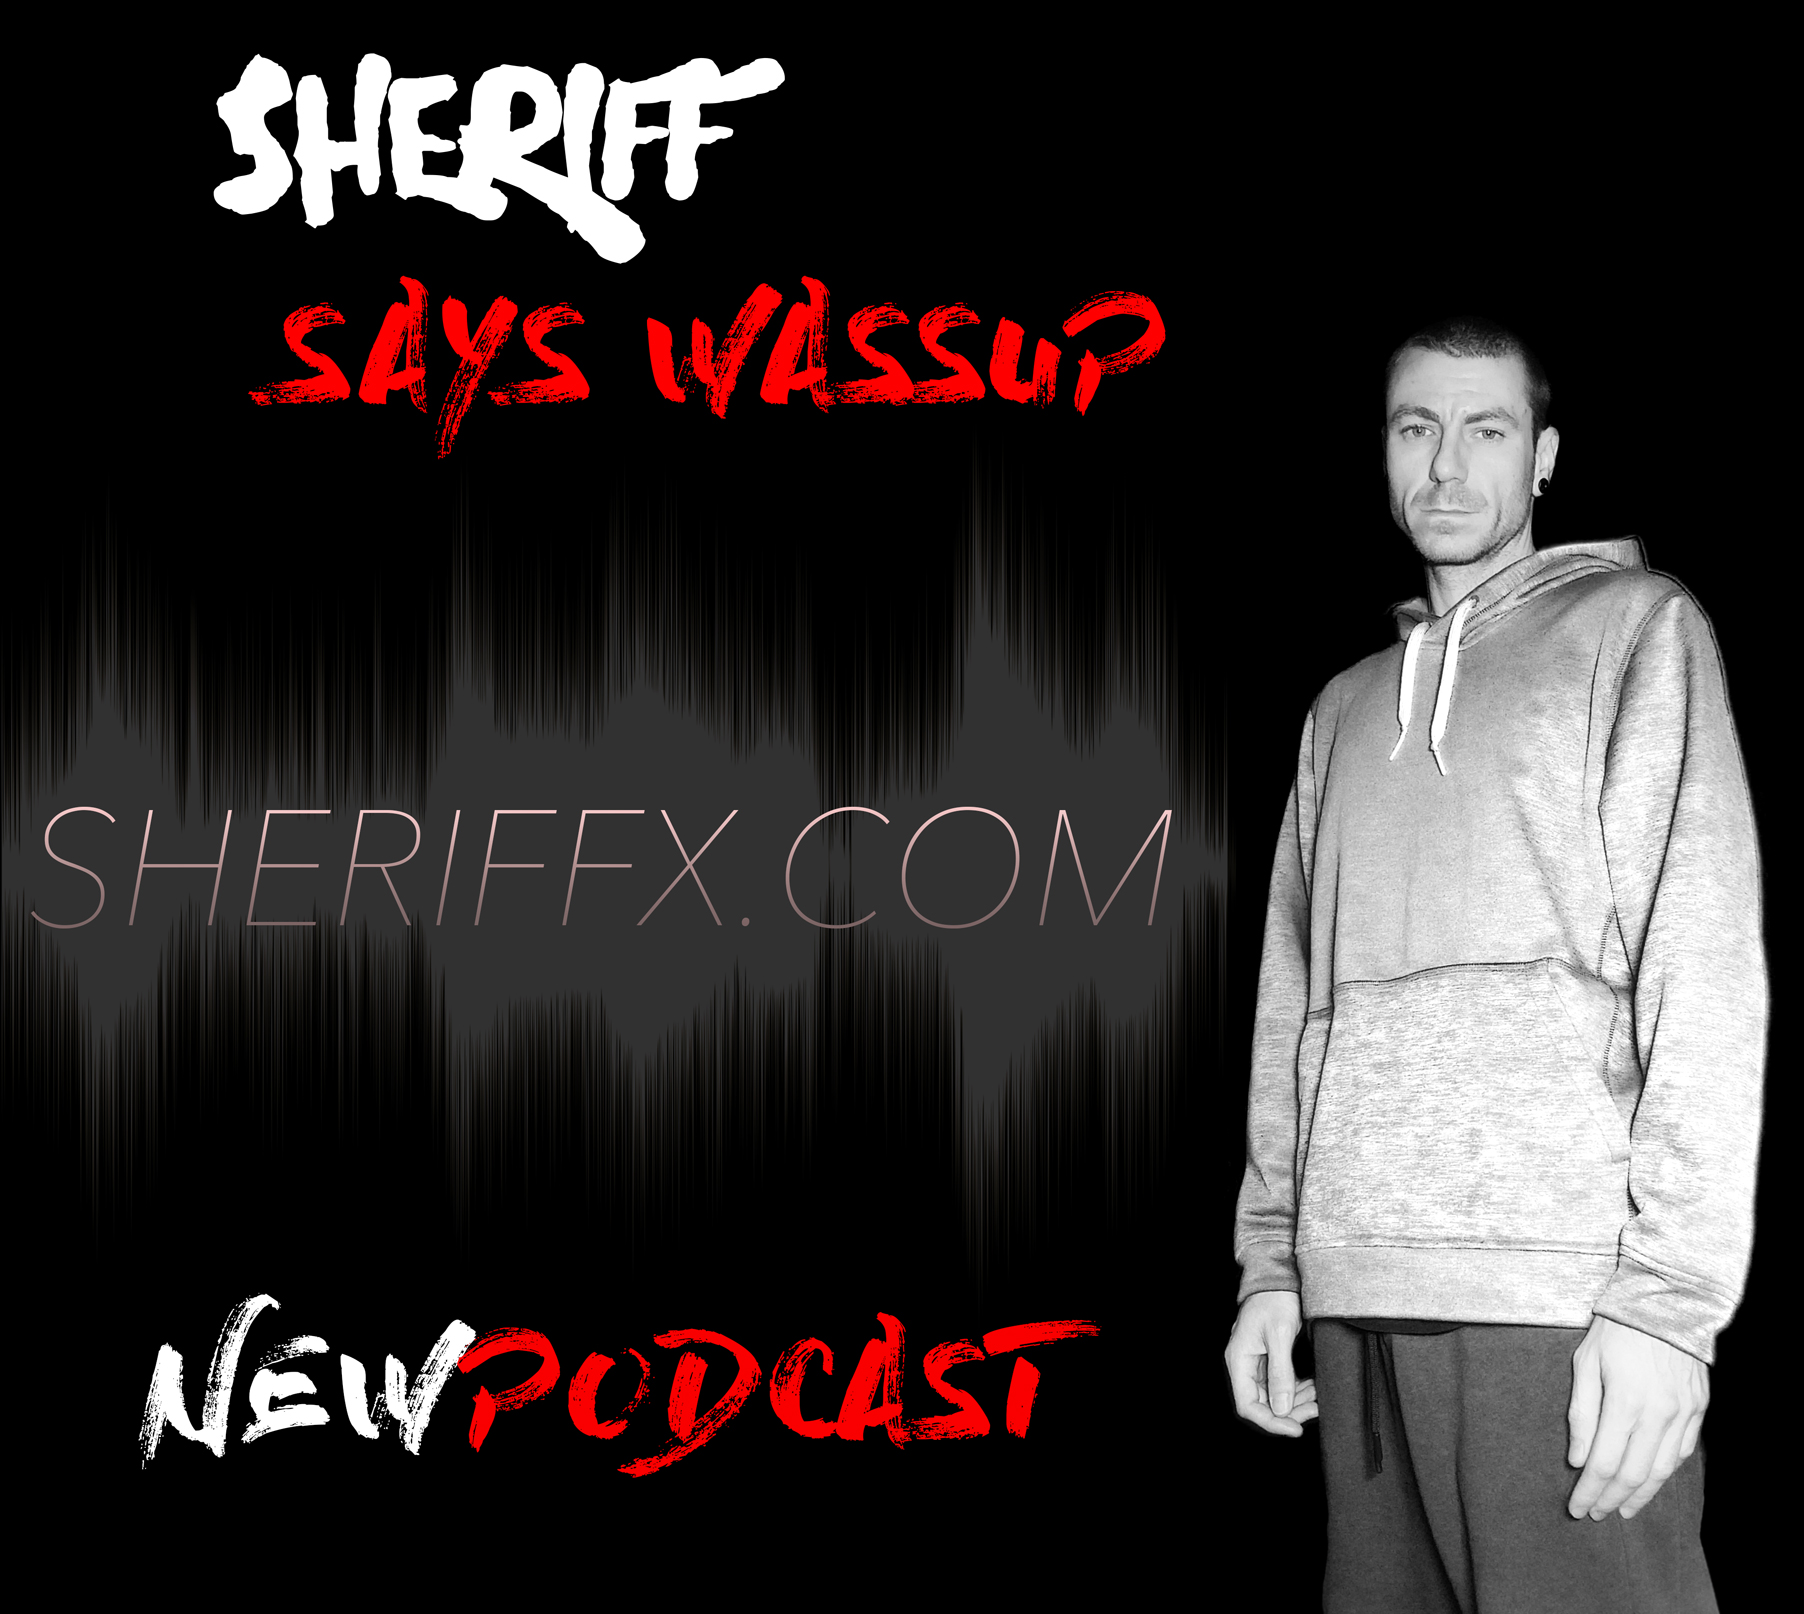 SHERIFF-SAYS-WASSUP-NEW-PODCAST.jpg